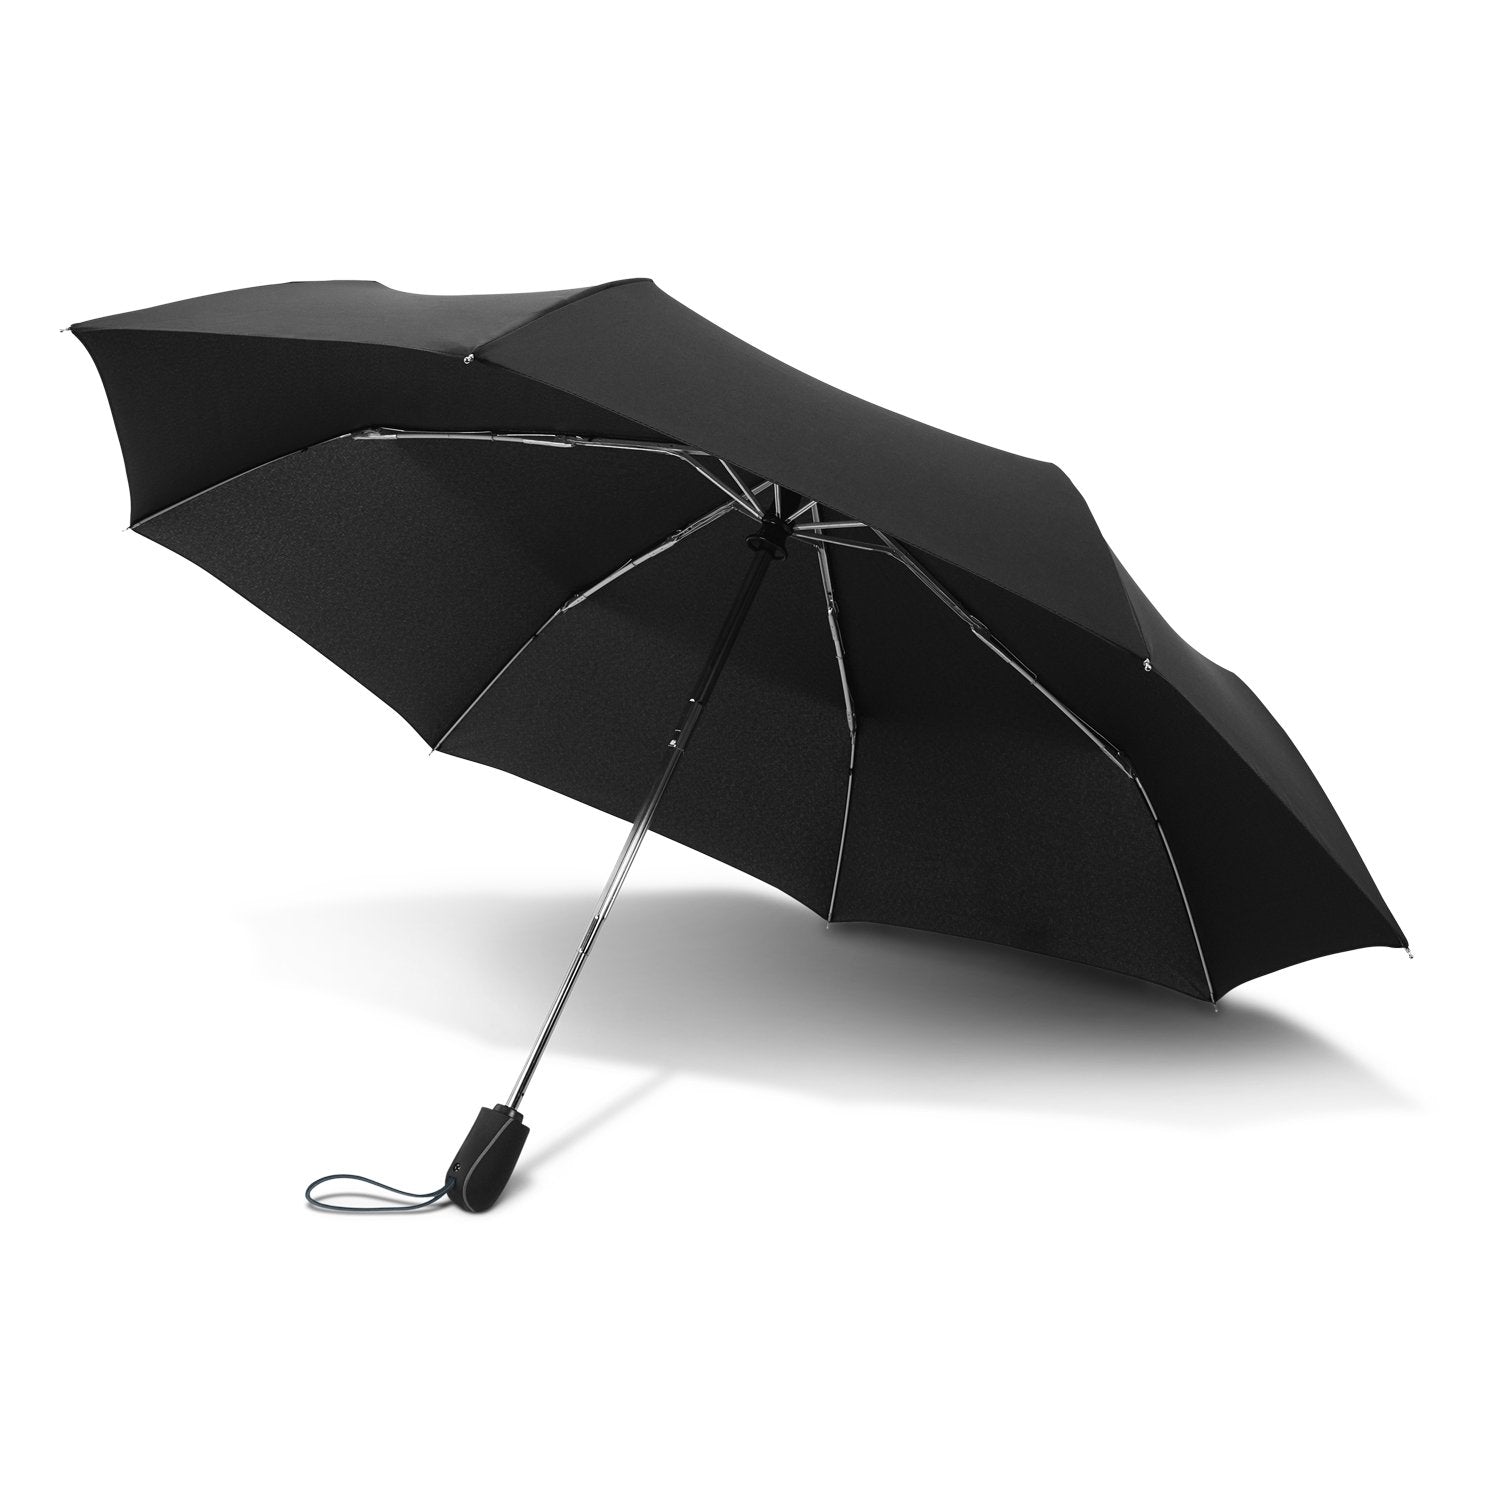 SWISS PEAK®️ TRAVELLER Premium Compact Umbrella With Wind Proof Fibreglass Frame - SMART Automatic Open & Close Push Button Technology